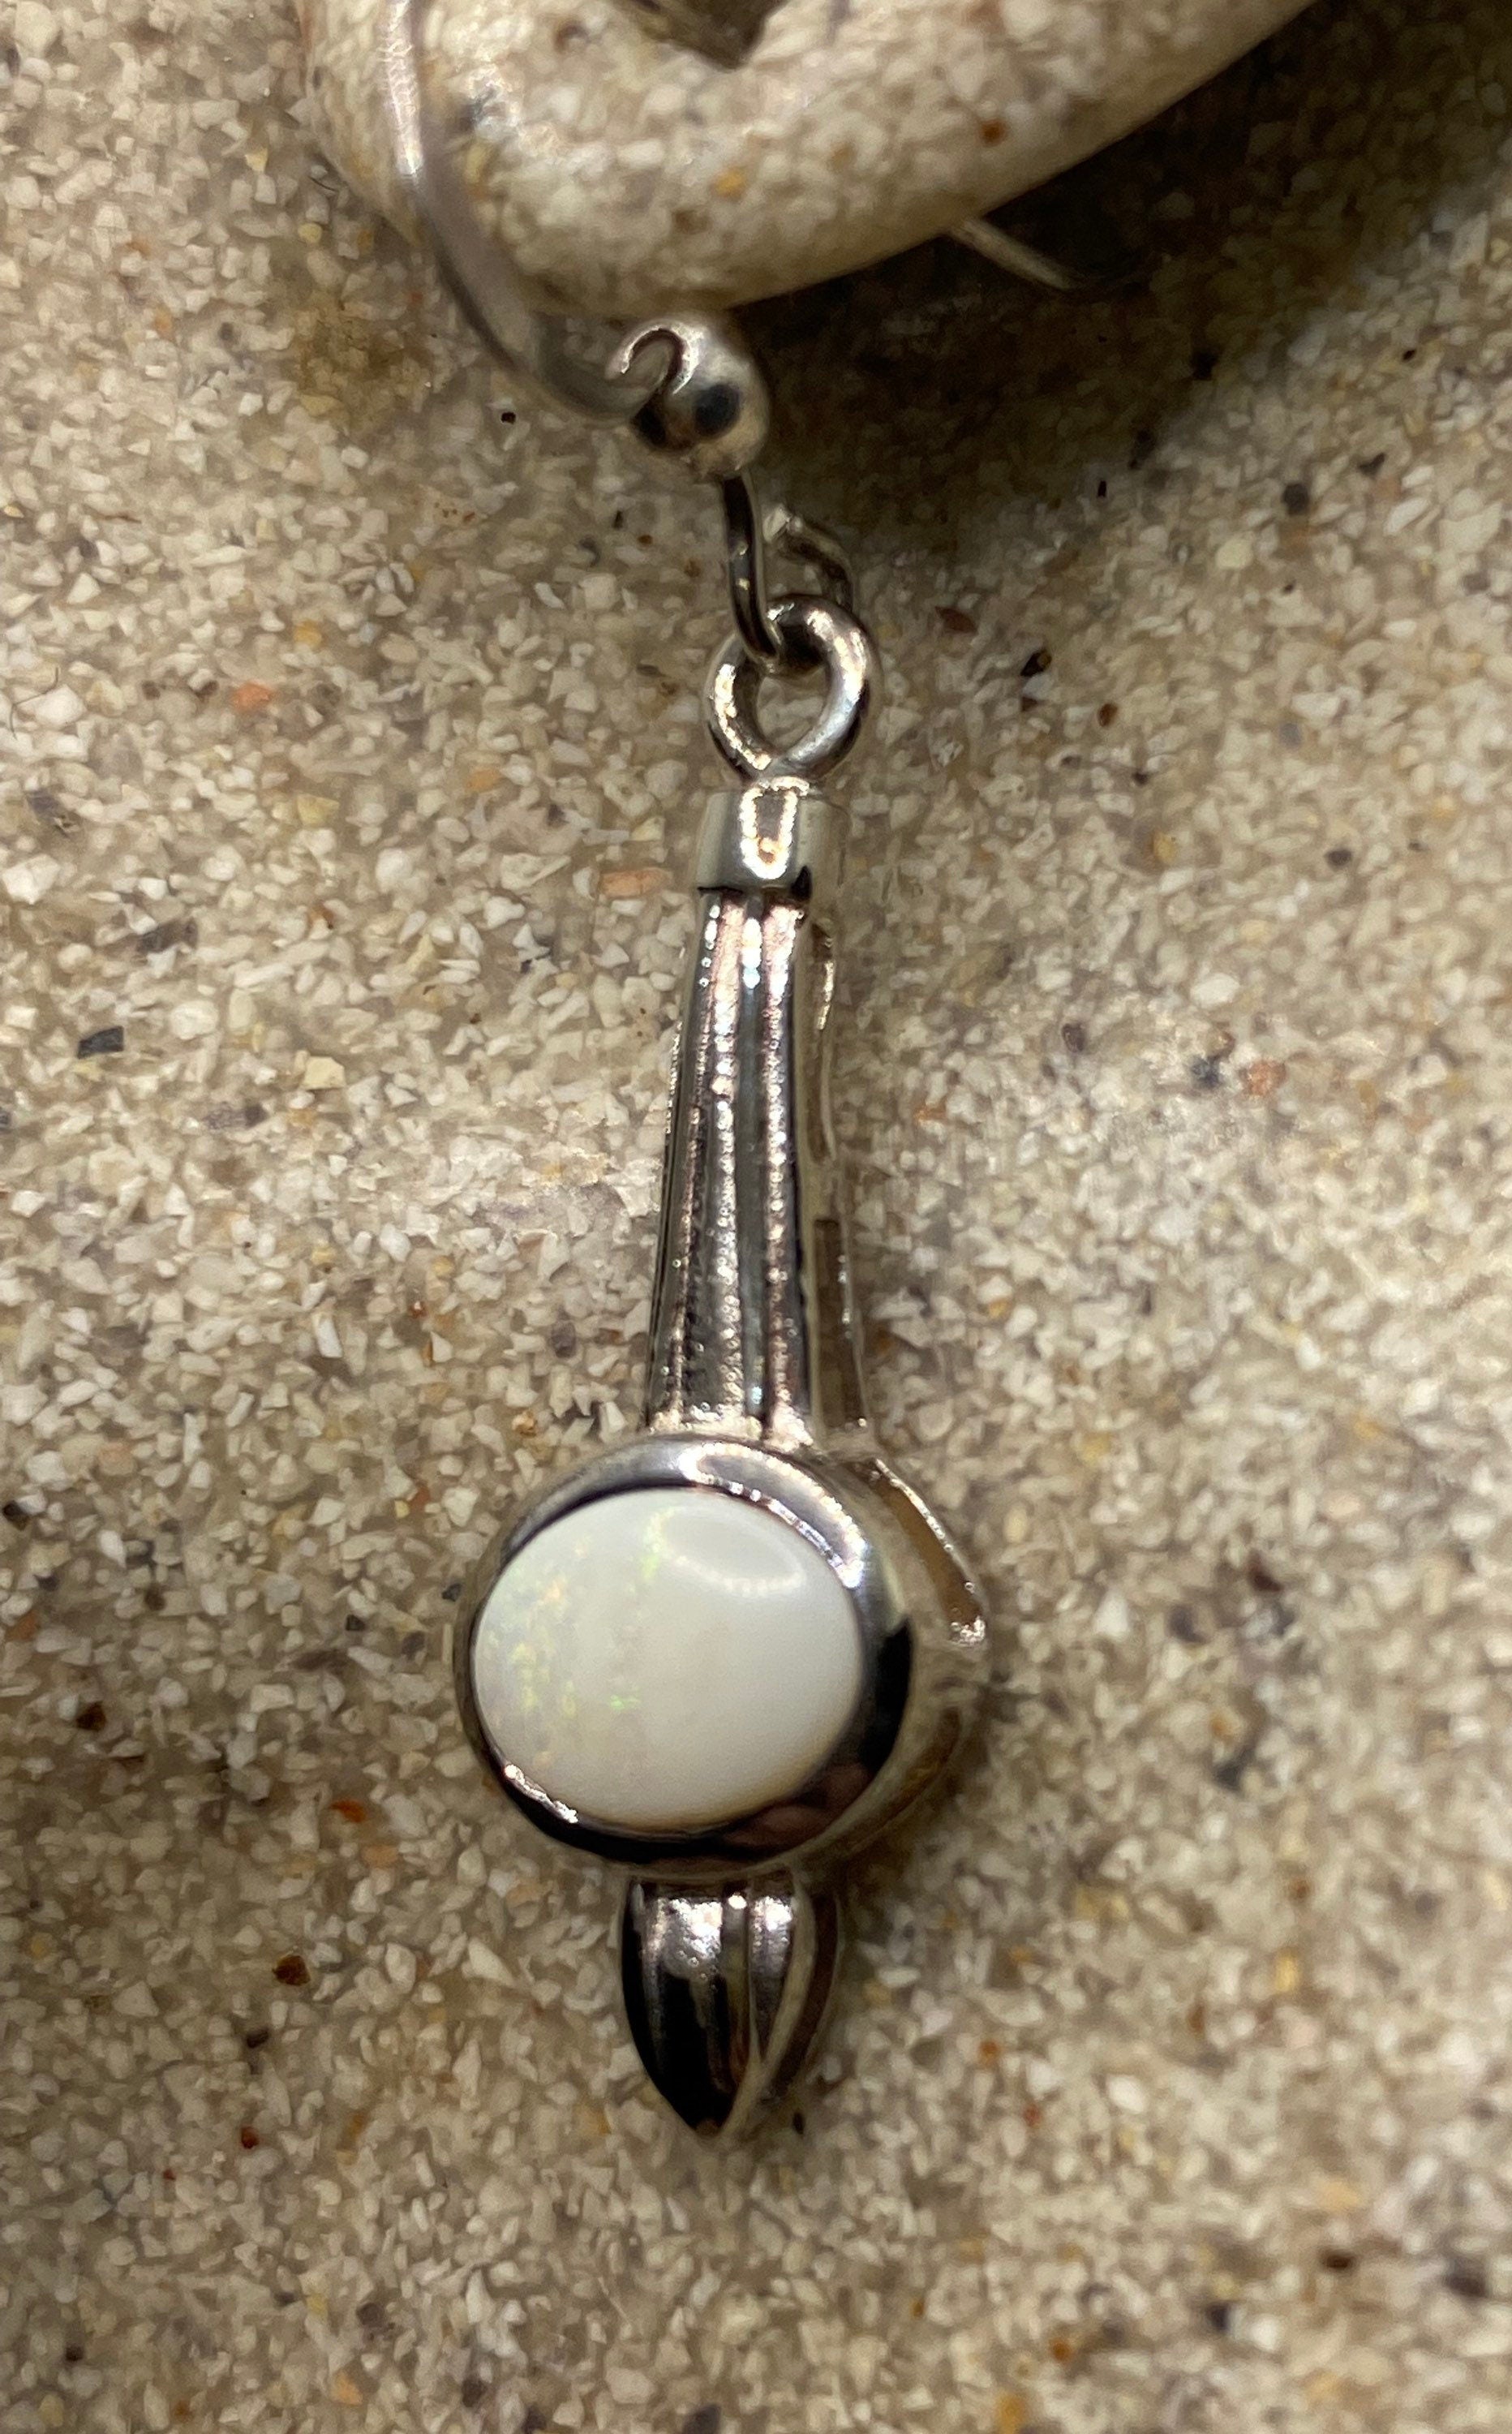 Vintage White Opal Earrings 925 Sterling Silver Leverback Dangle